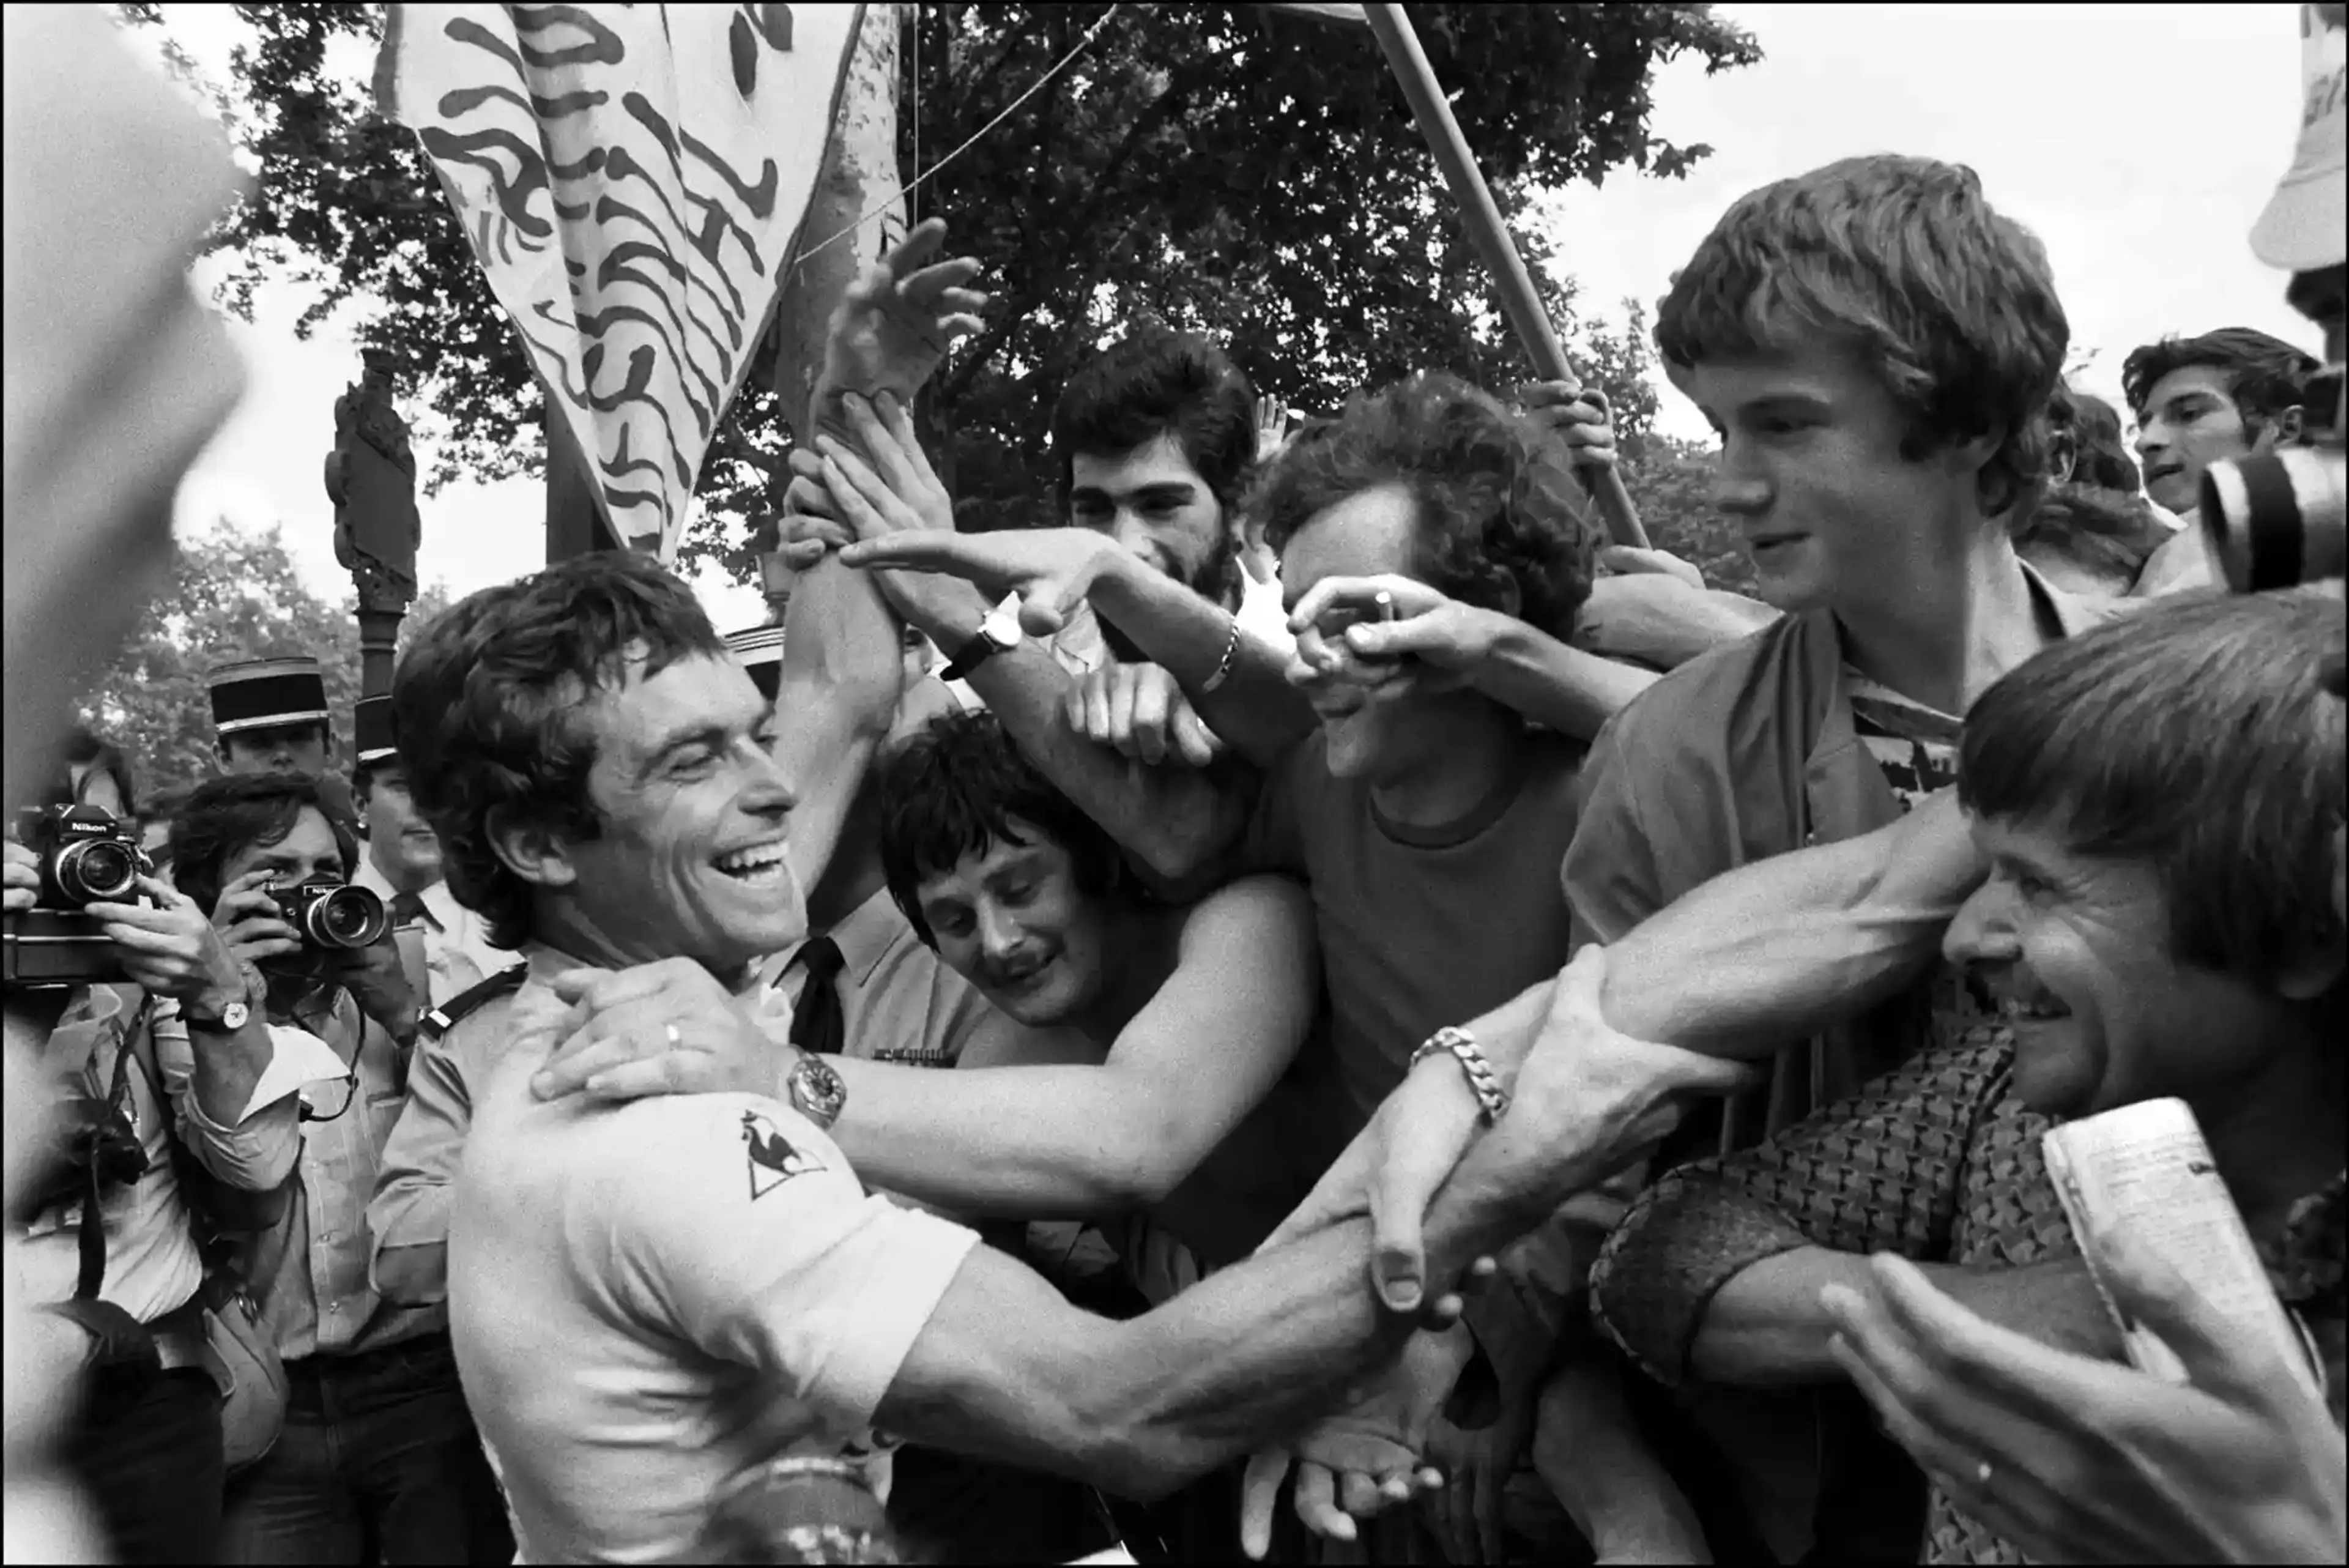 July 1978, Paris, France - Hinault celebrates with spectators after winning the 65th Tour de France